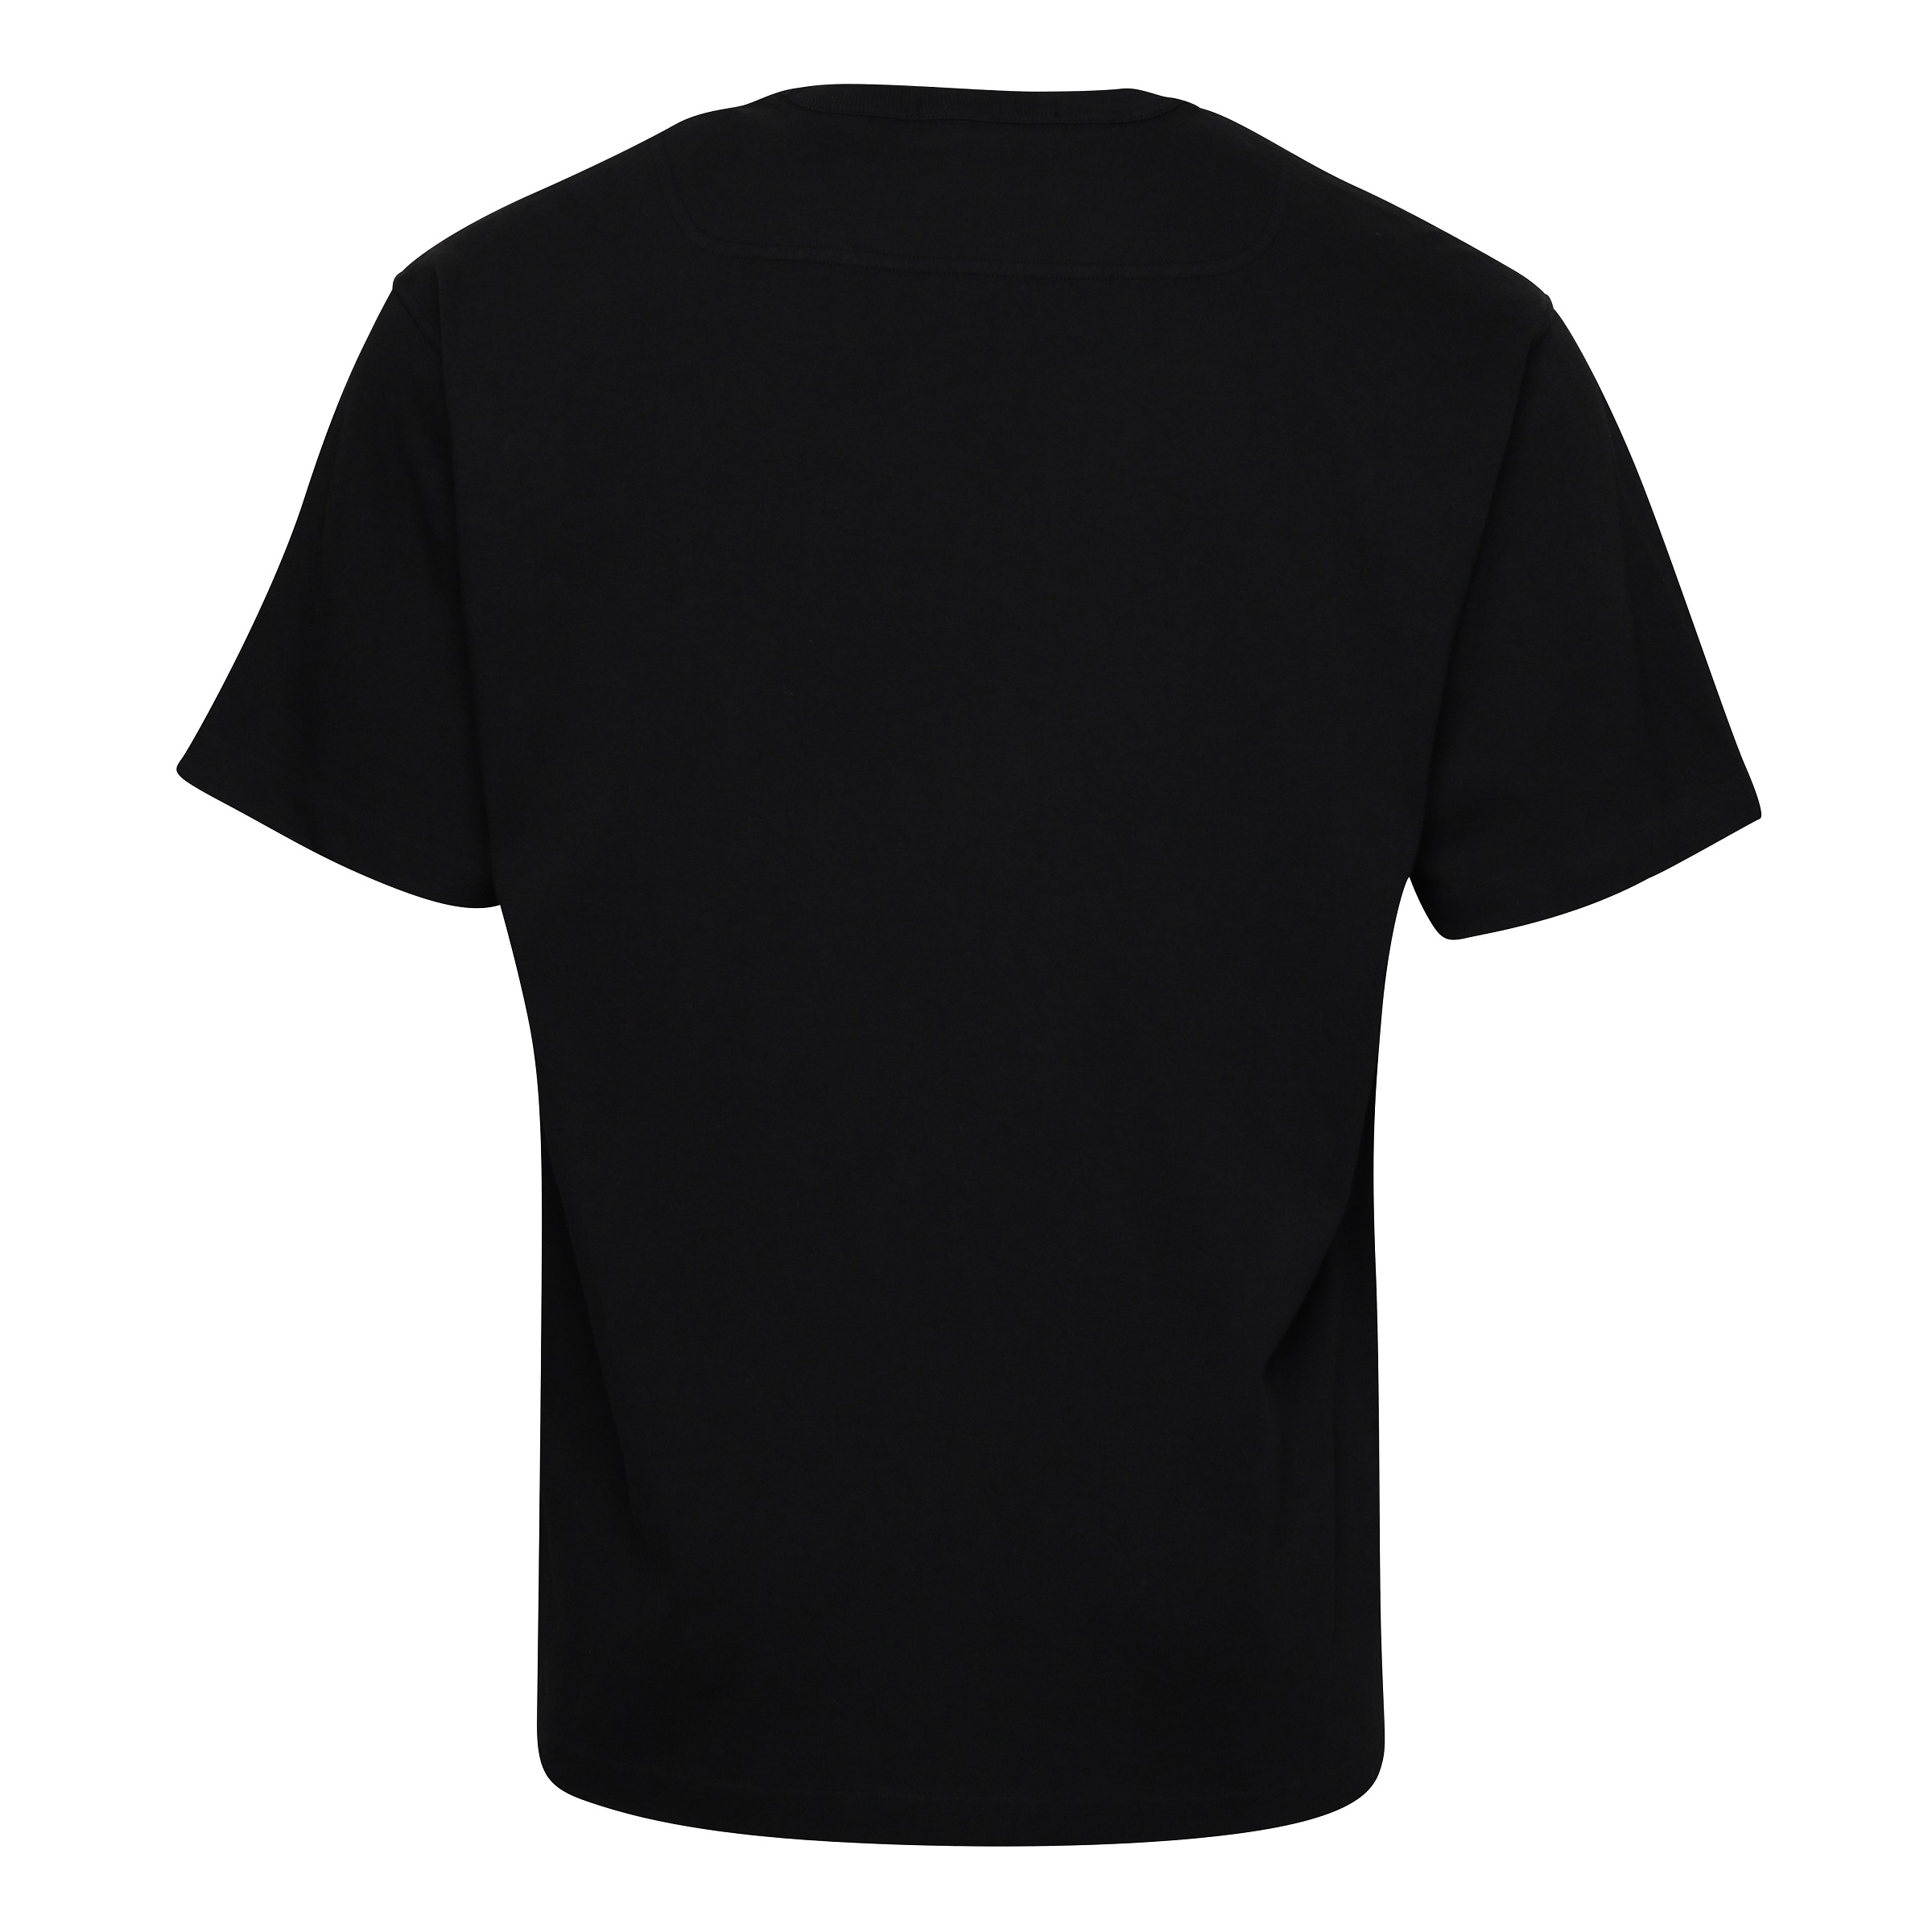 STONE ISLAND Oversized Stamp T-Shirt in Black